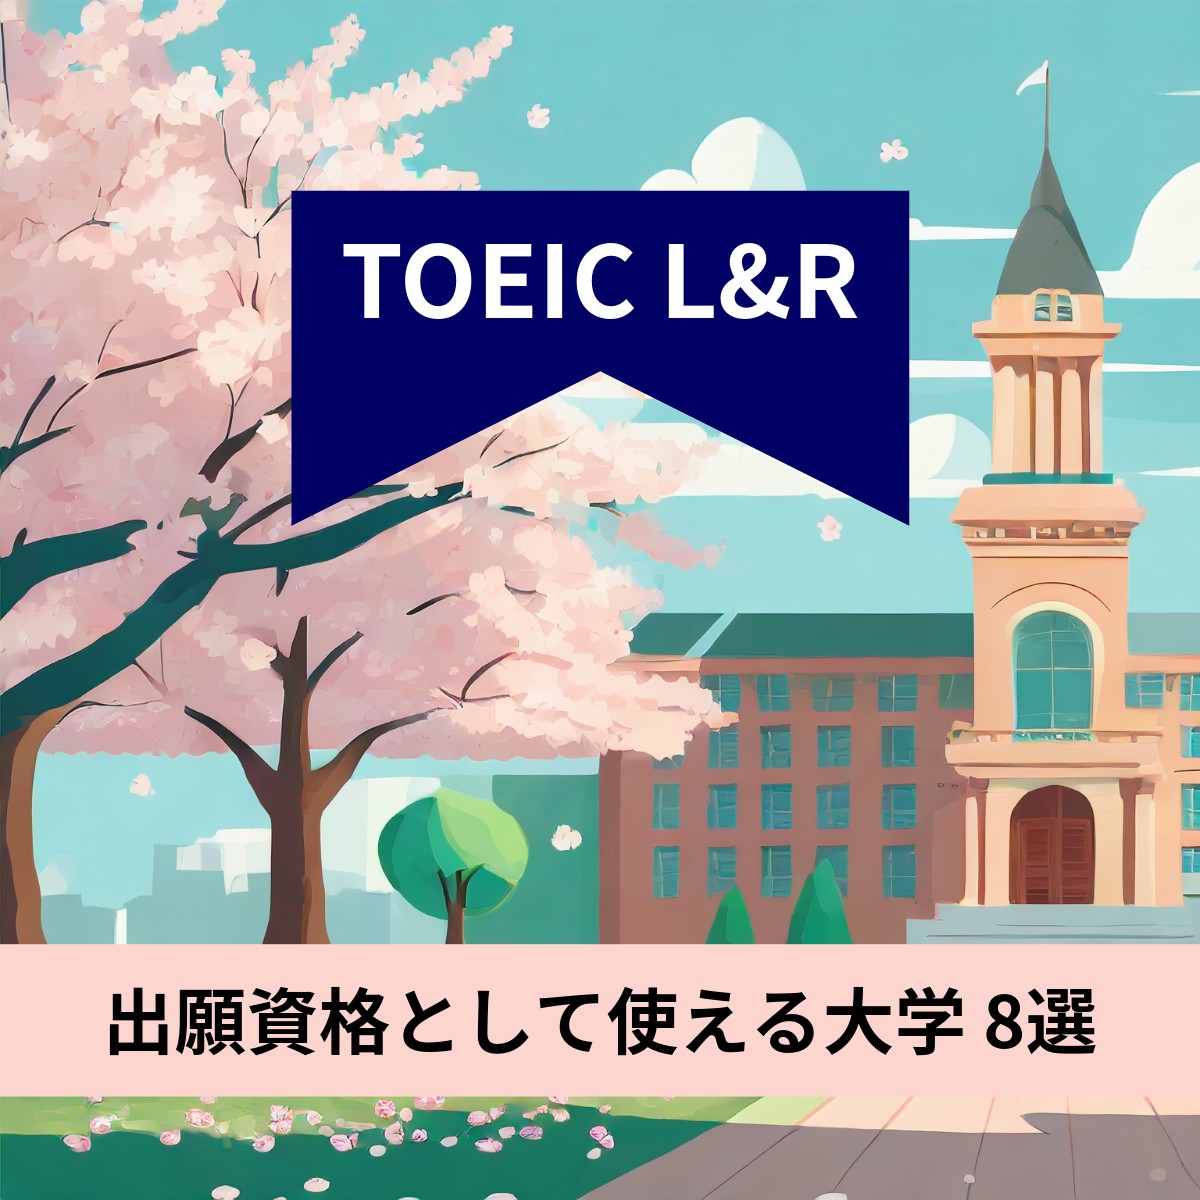 TOEIC L&R だけで受験できる大学8選！【一般＆総合型】